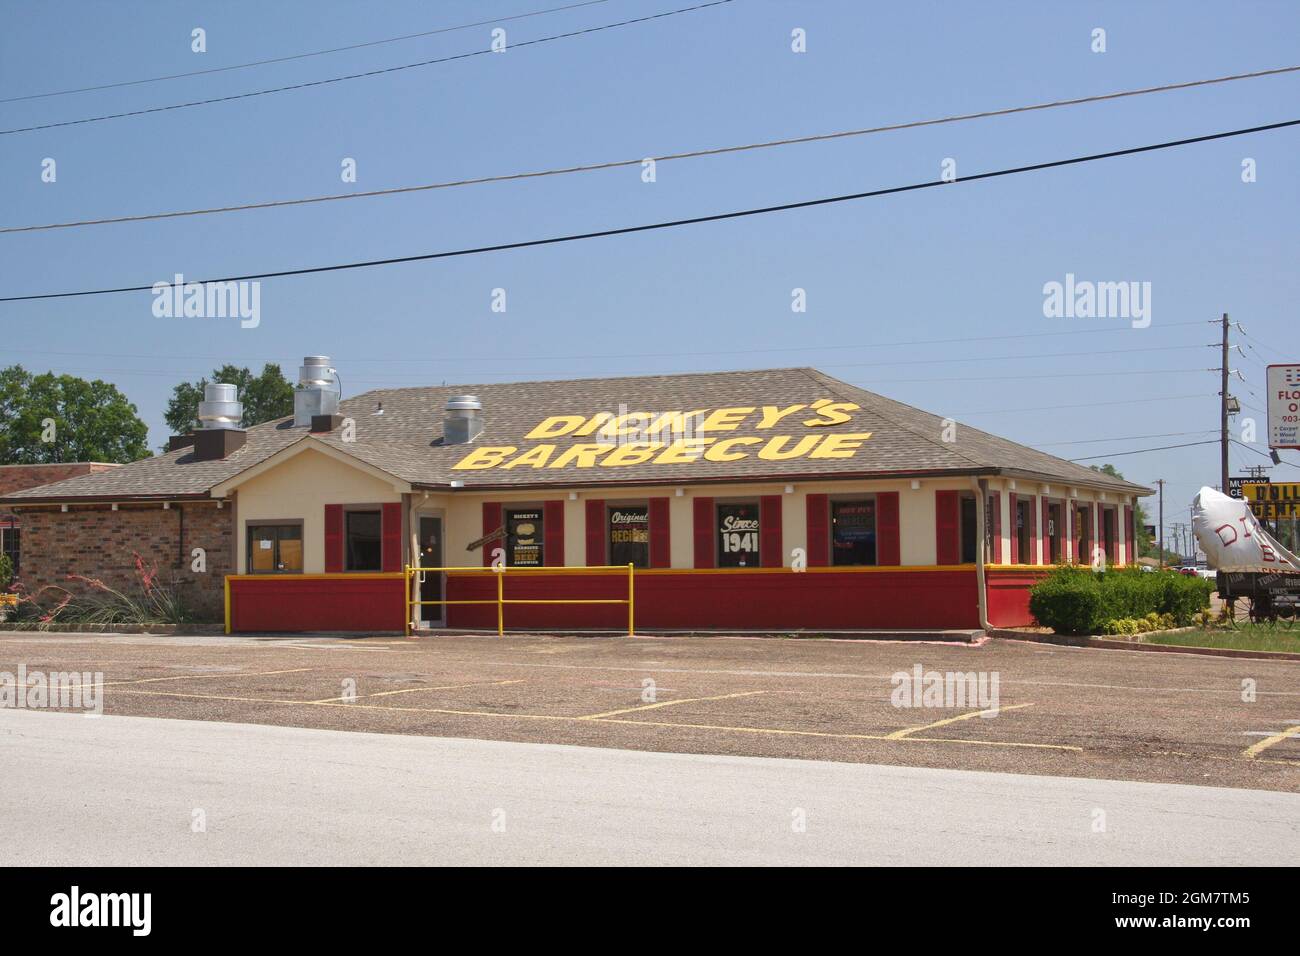 Longview, TX - June 14: Abandoned Dickey's Barbecue restaurant located in Longview, TX Stock Photo